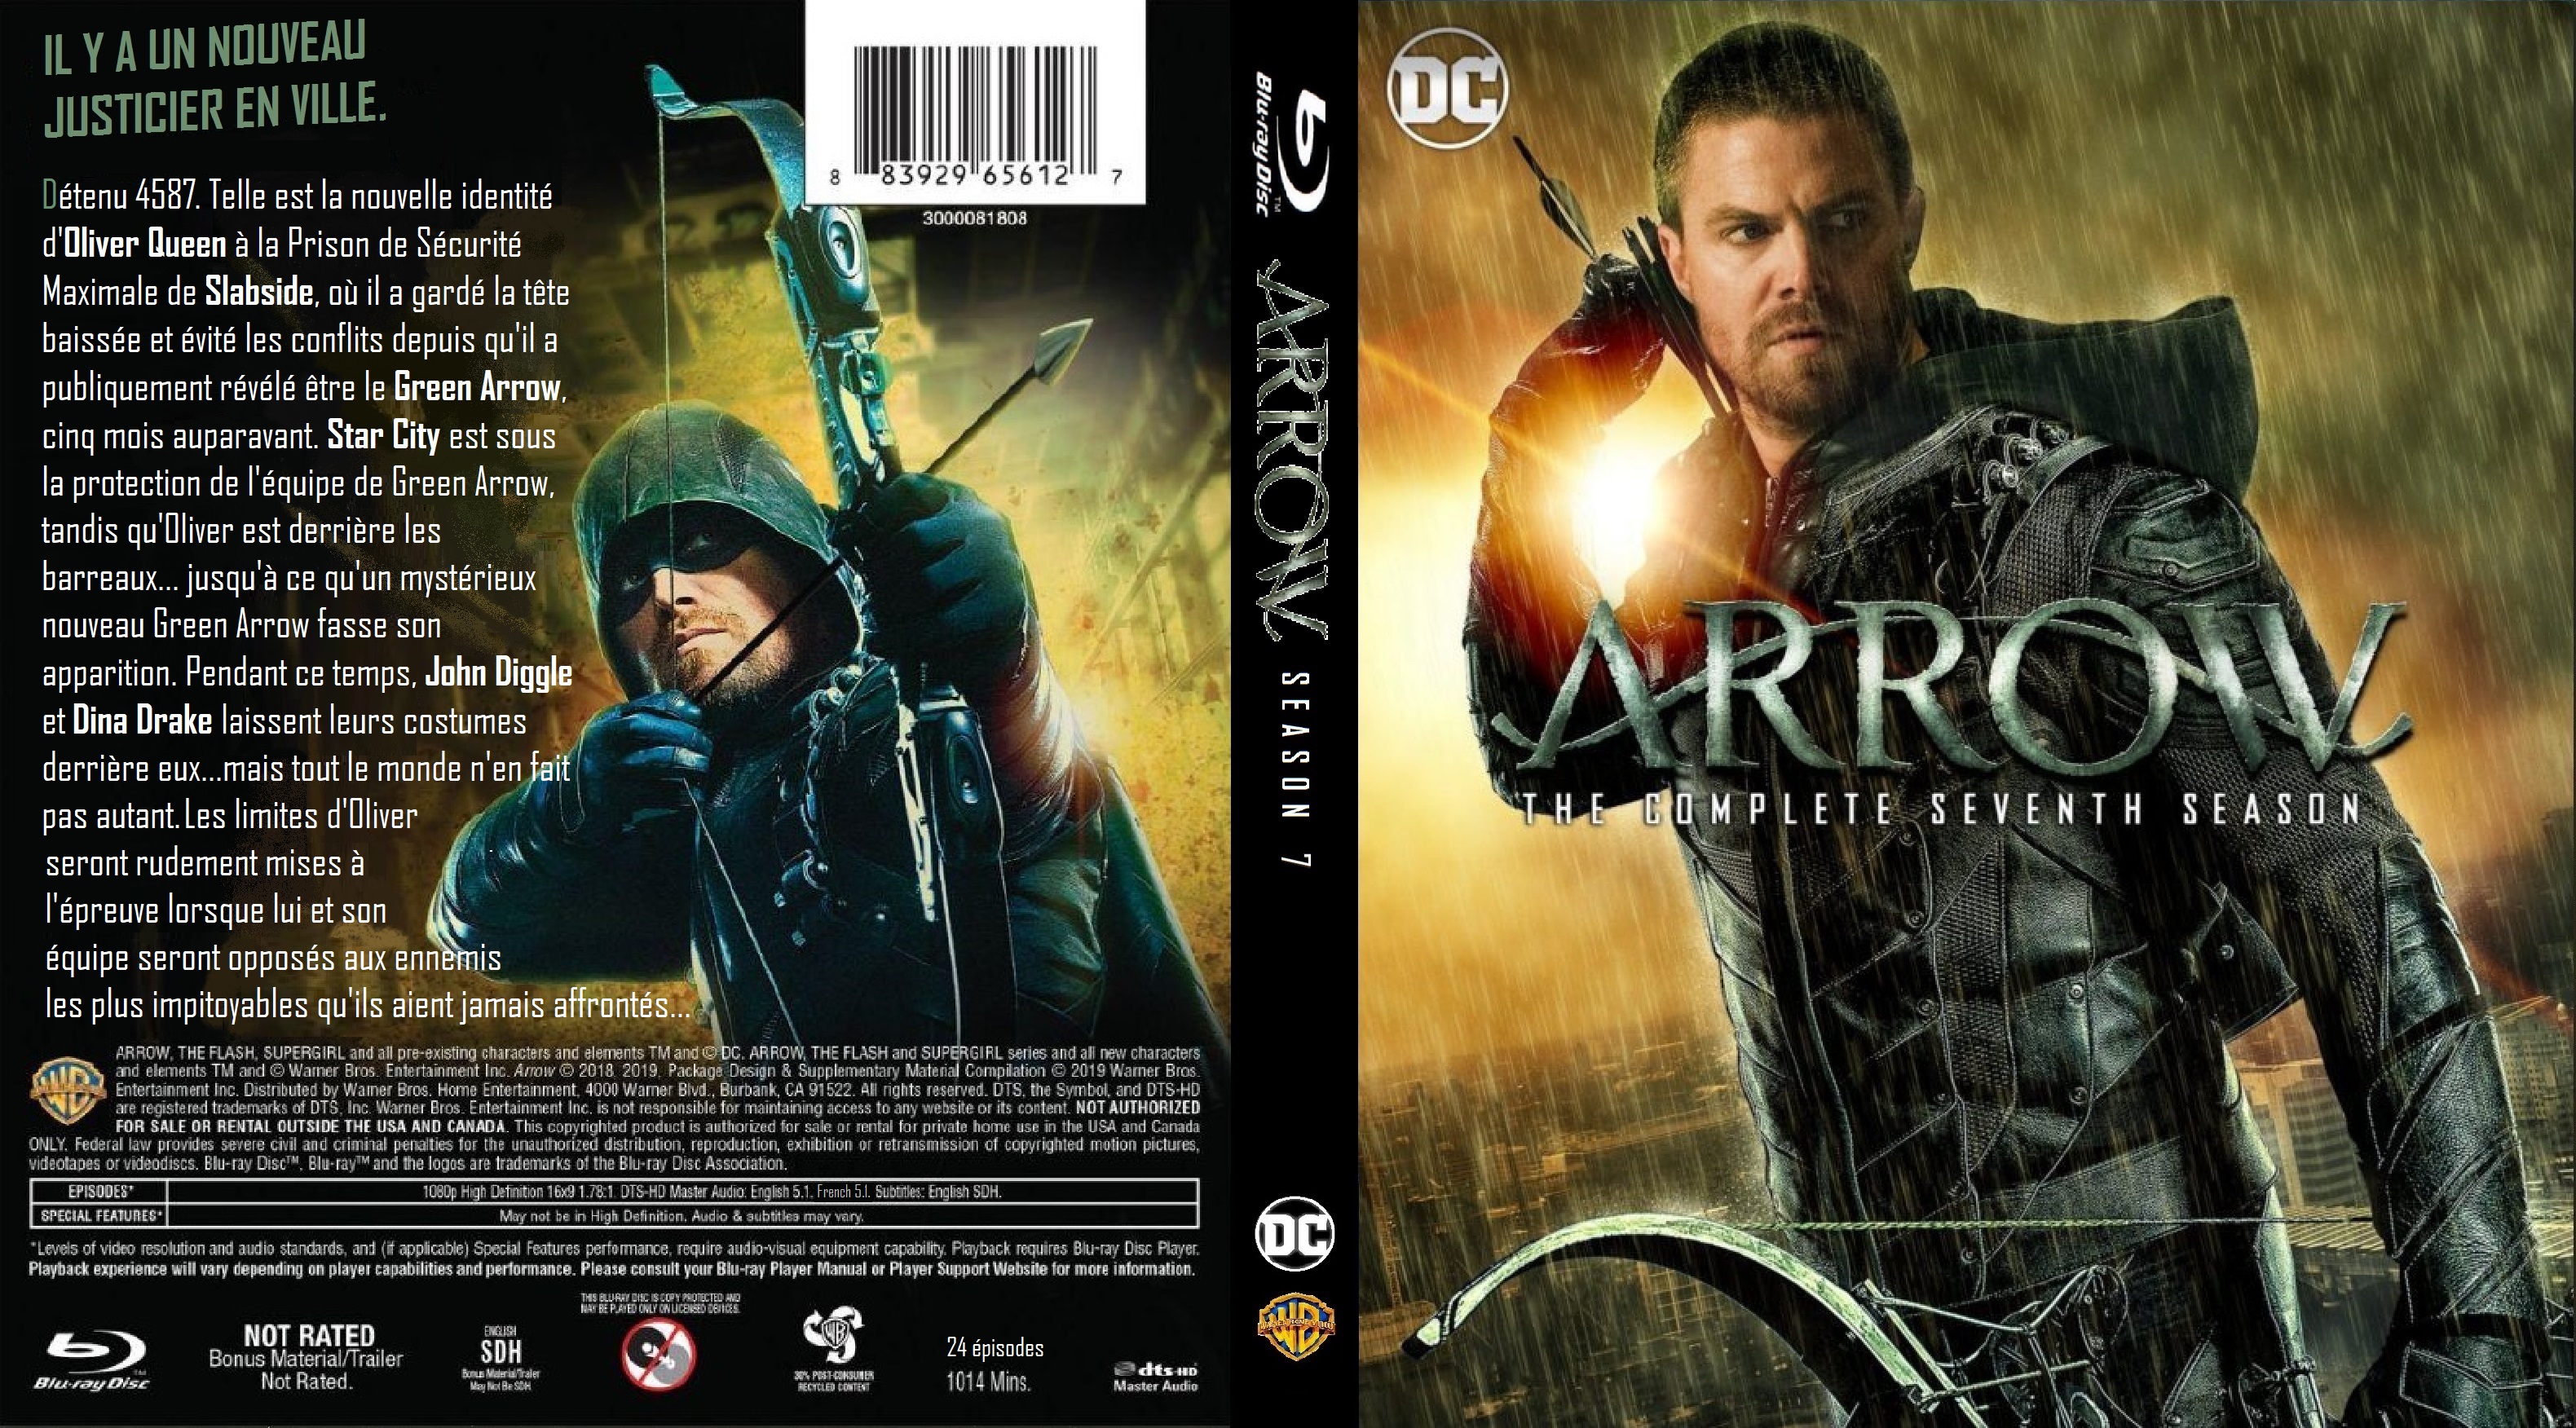 Jaquette DVD Arrow saison 7 custom (BLU-RAY) v3